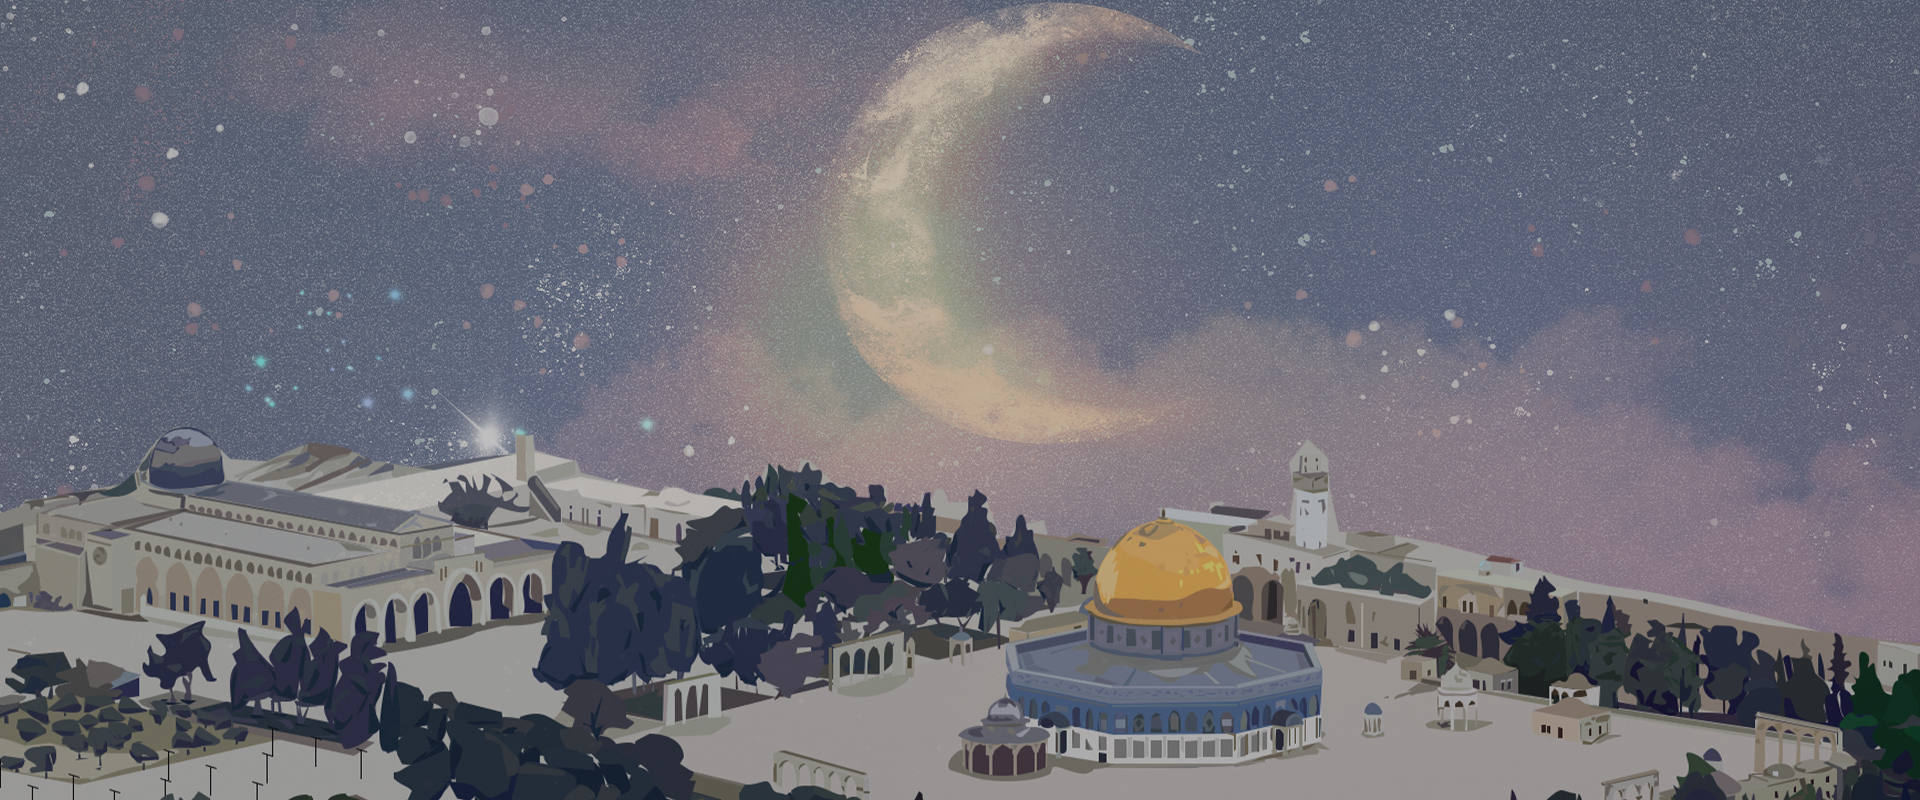 masjid al aqsa at night